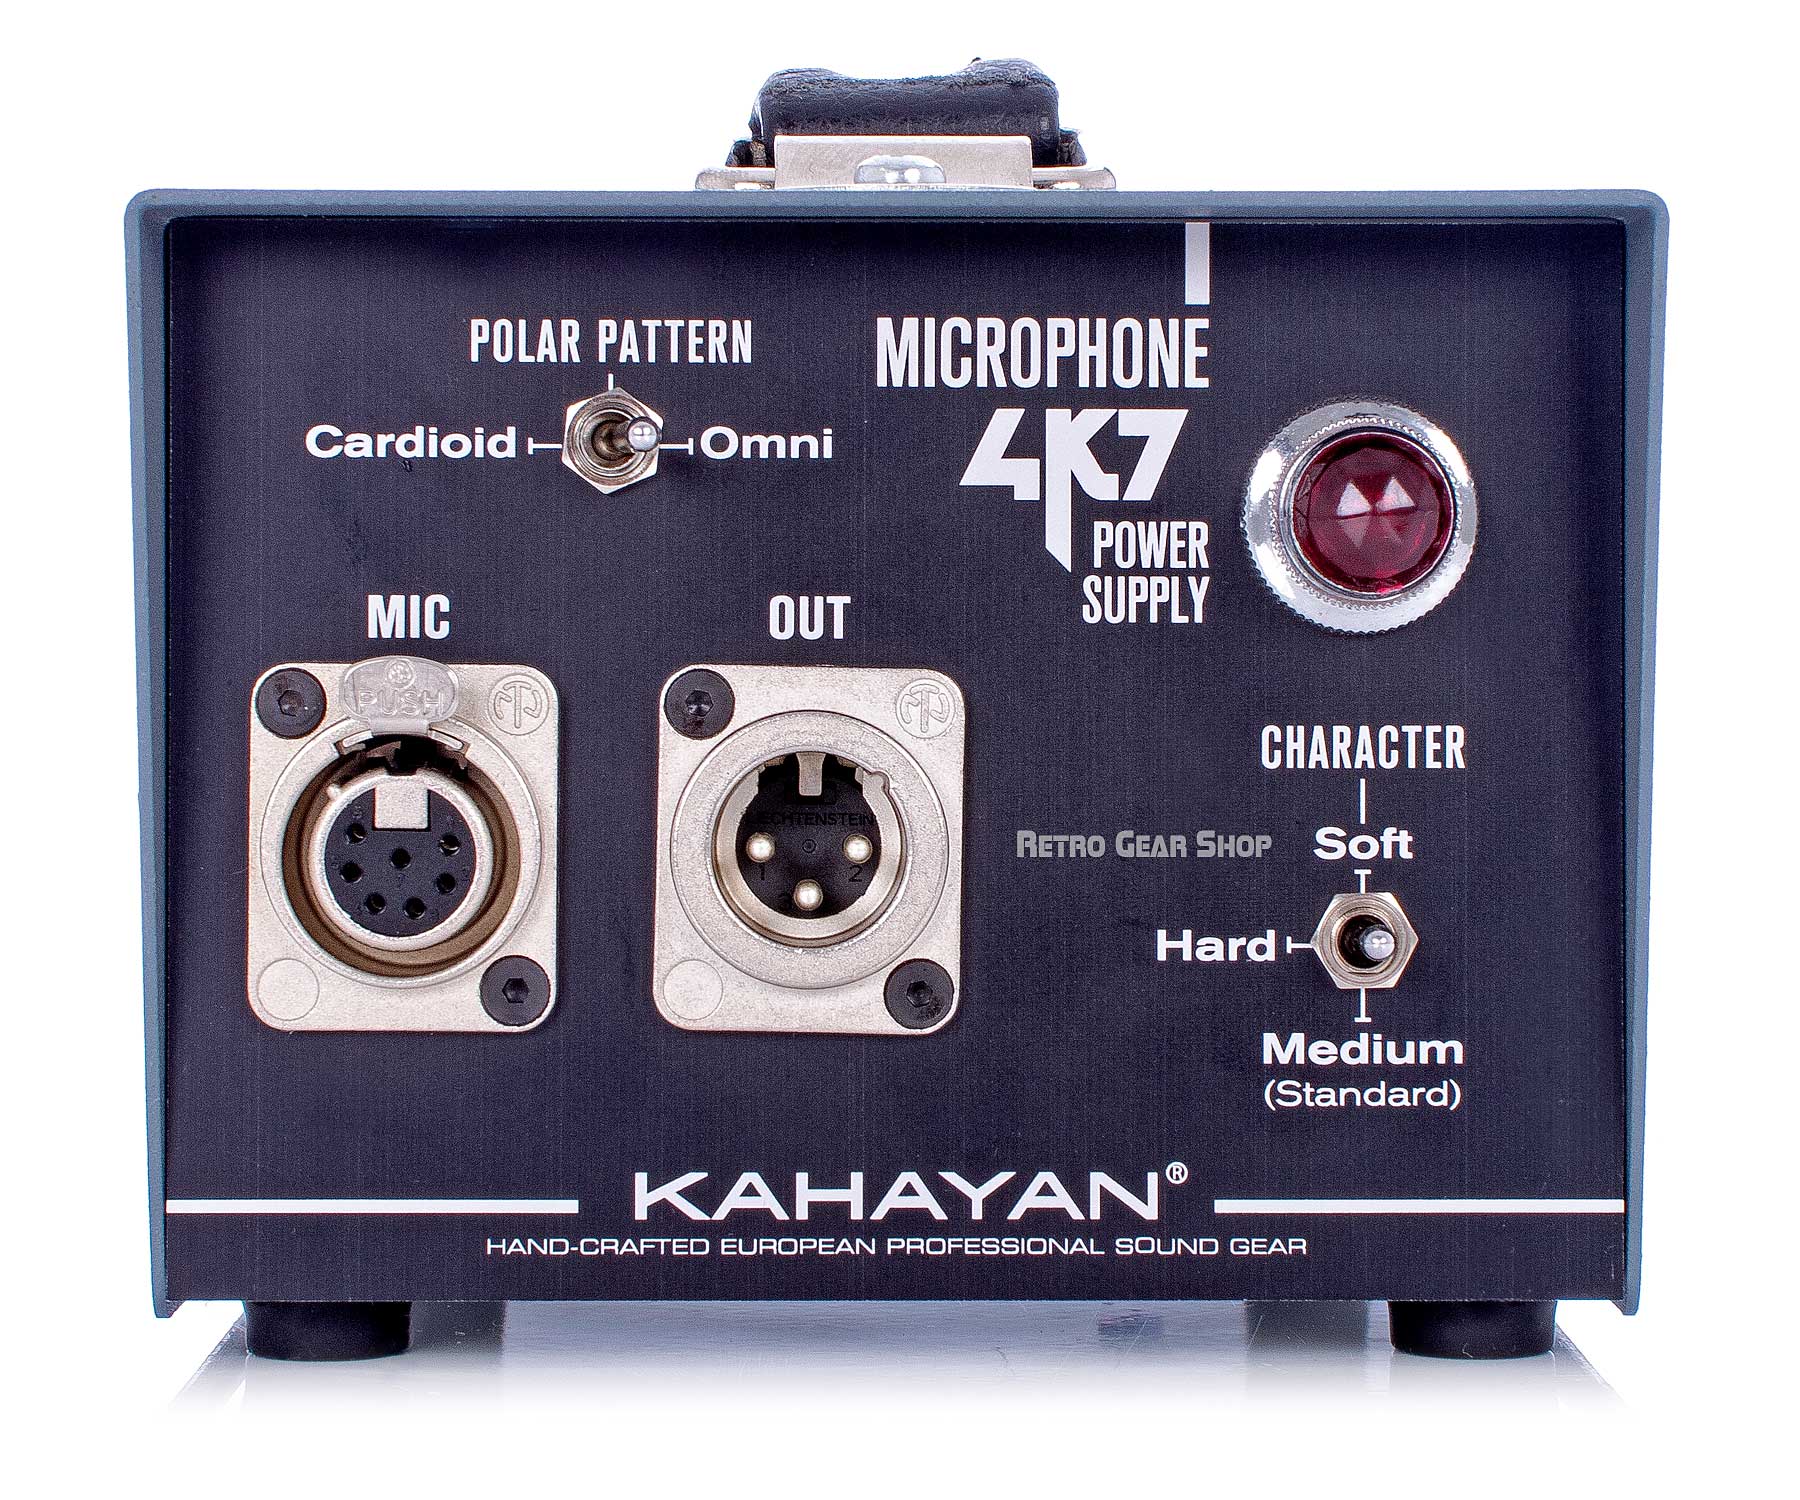 Kahayan 4K7 Microphone Power Supply Rear